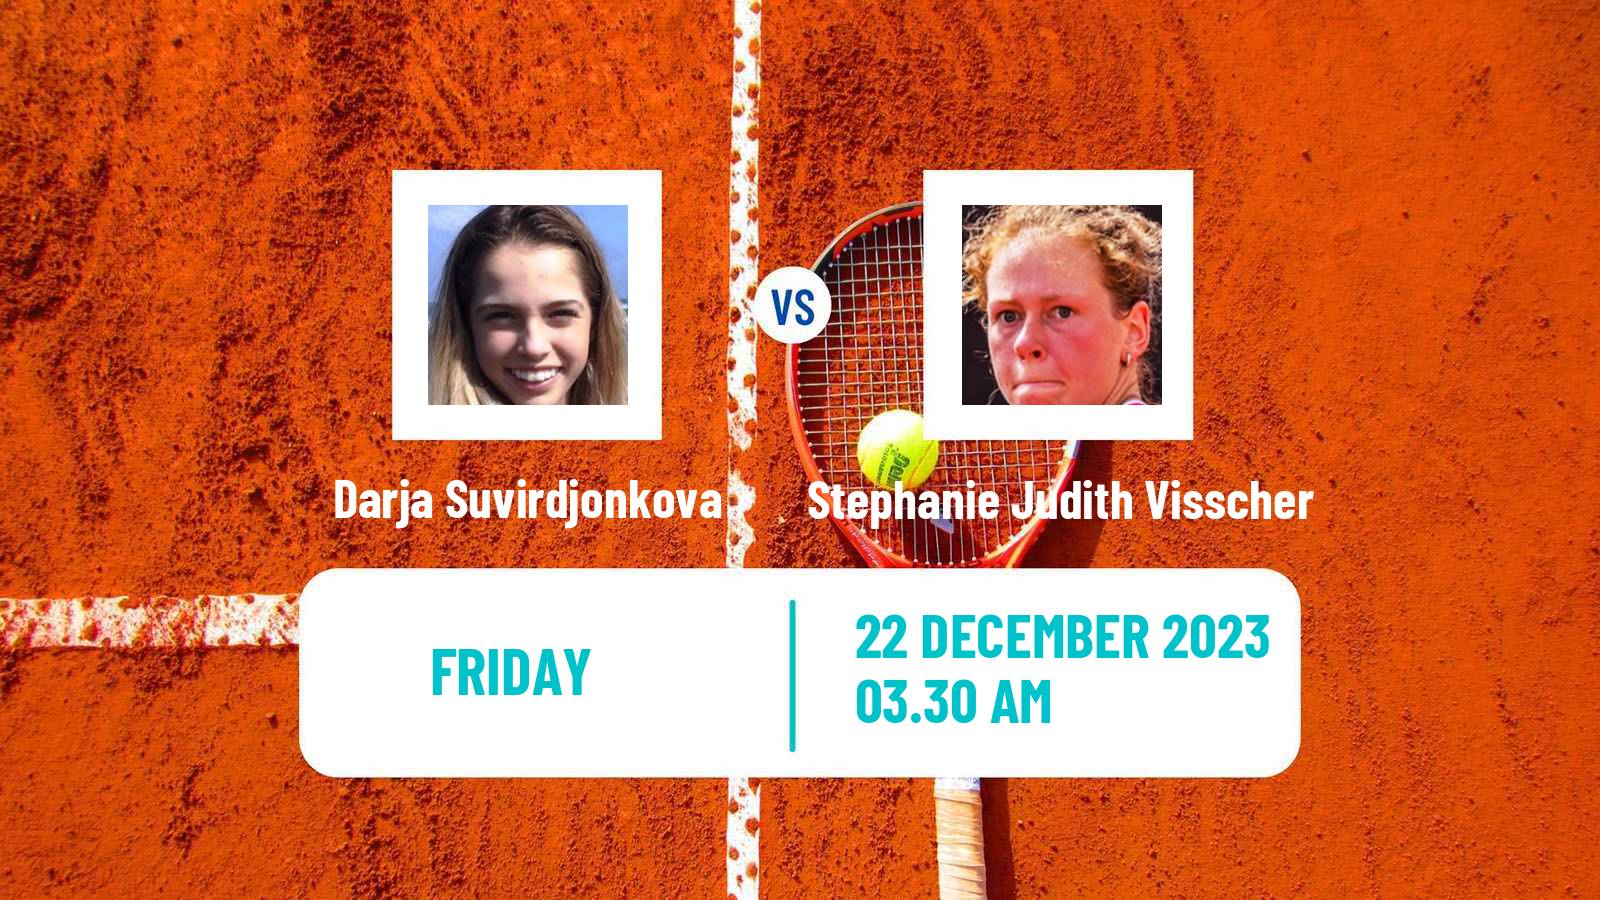 Tennis ITF W15 Monastir 43 Women Darja Suvirdjonkova - Stephanie Judith Visscher